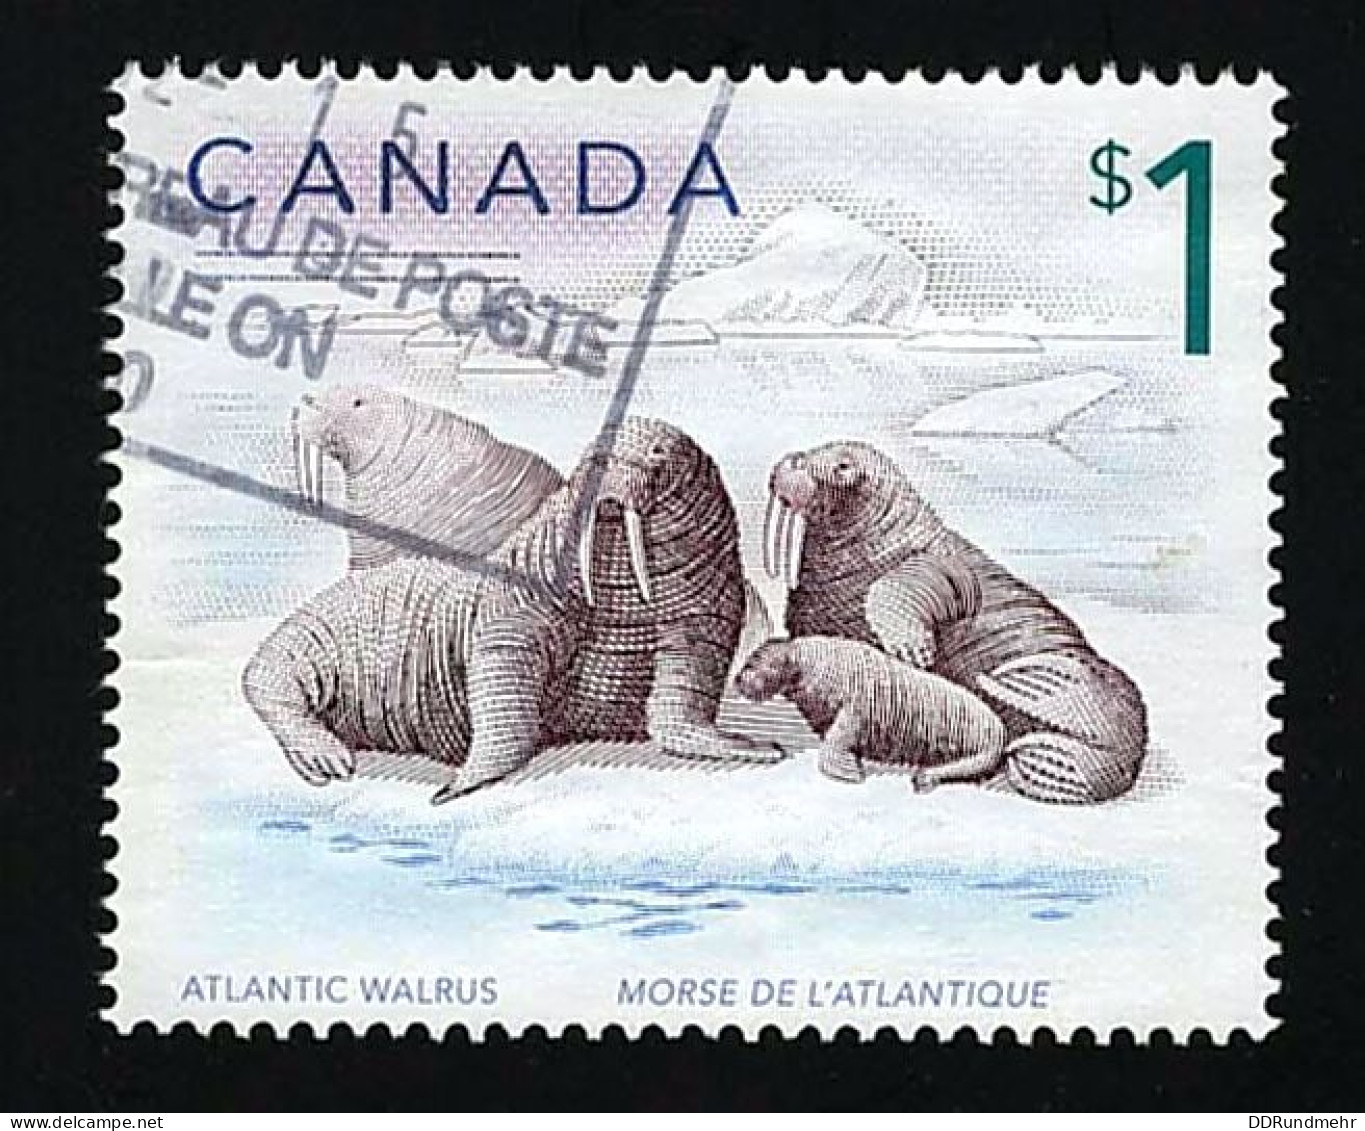 2005 Atlantic Walrus Michel CA 2300 Stamp Number CA 1689 Yvert Et Tellier CA 2183 Stanley Gibbons CA 1758 Used - Usati